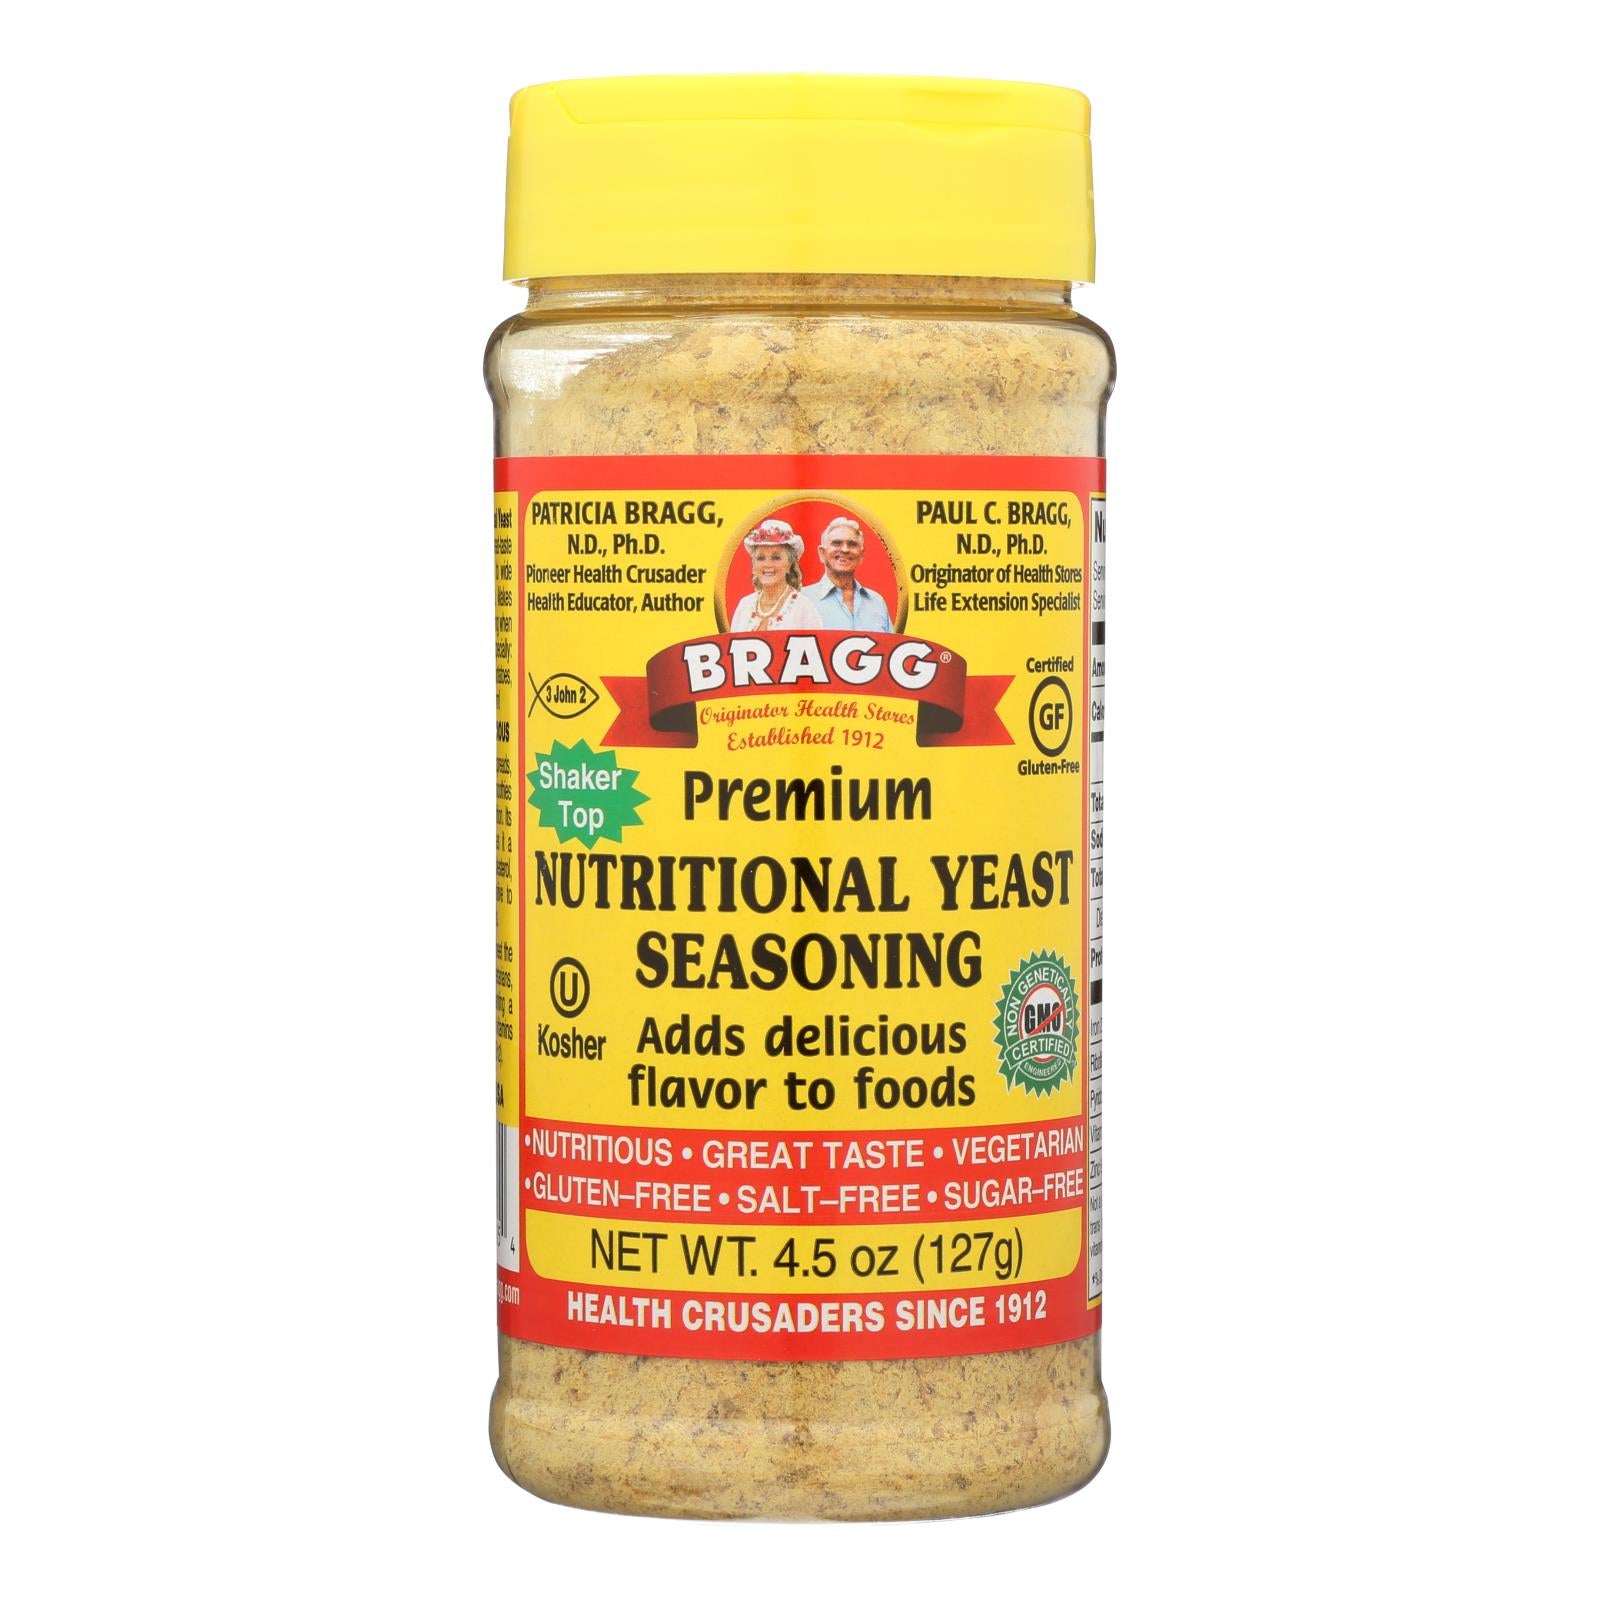 Bragg Organic Sprinkle Seasoning - Perfect Supplements